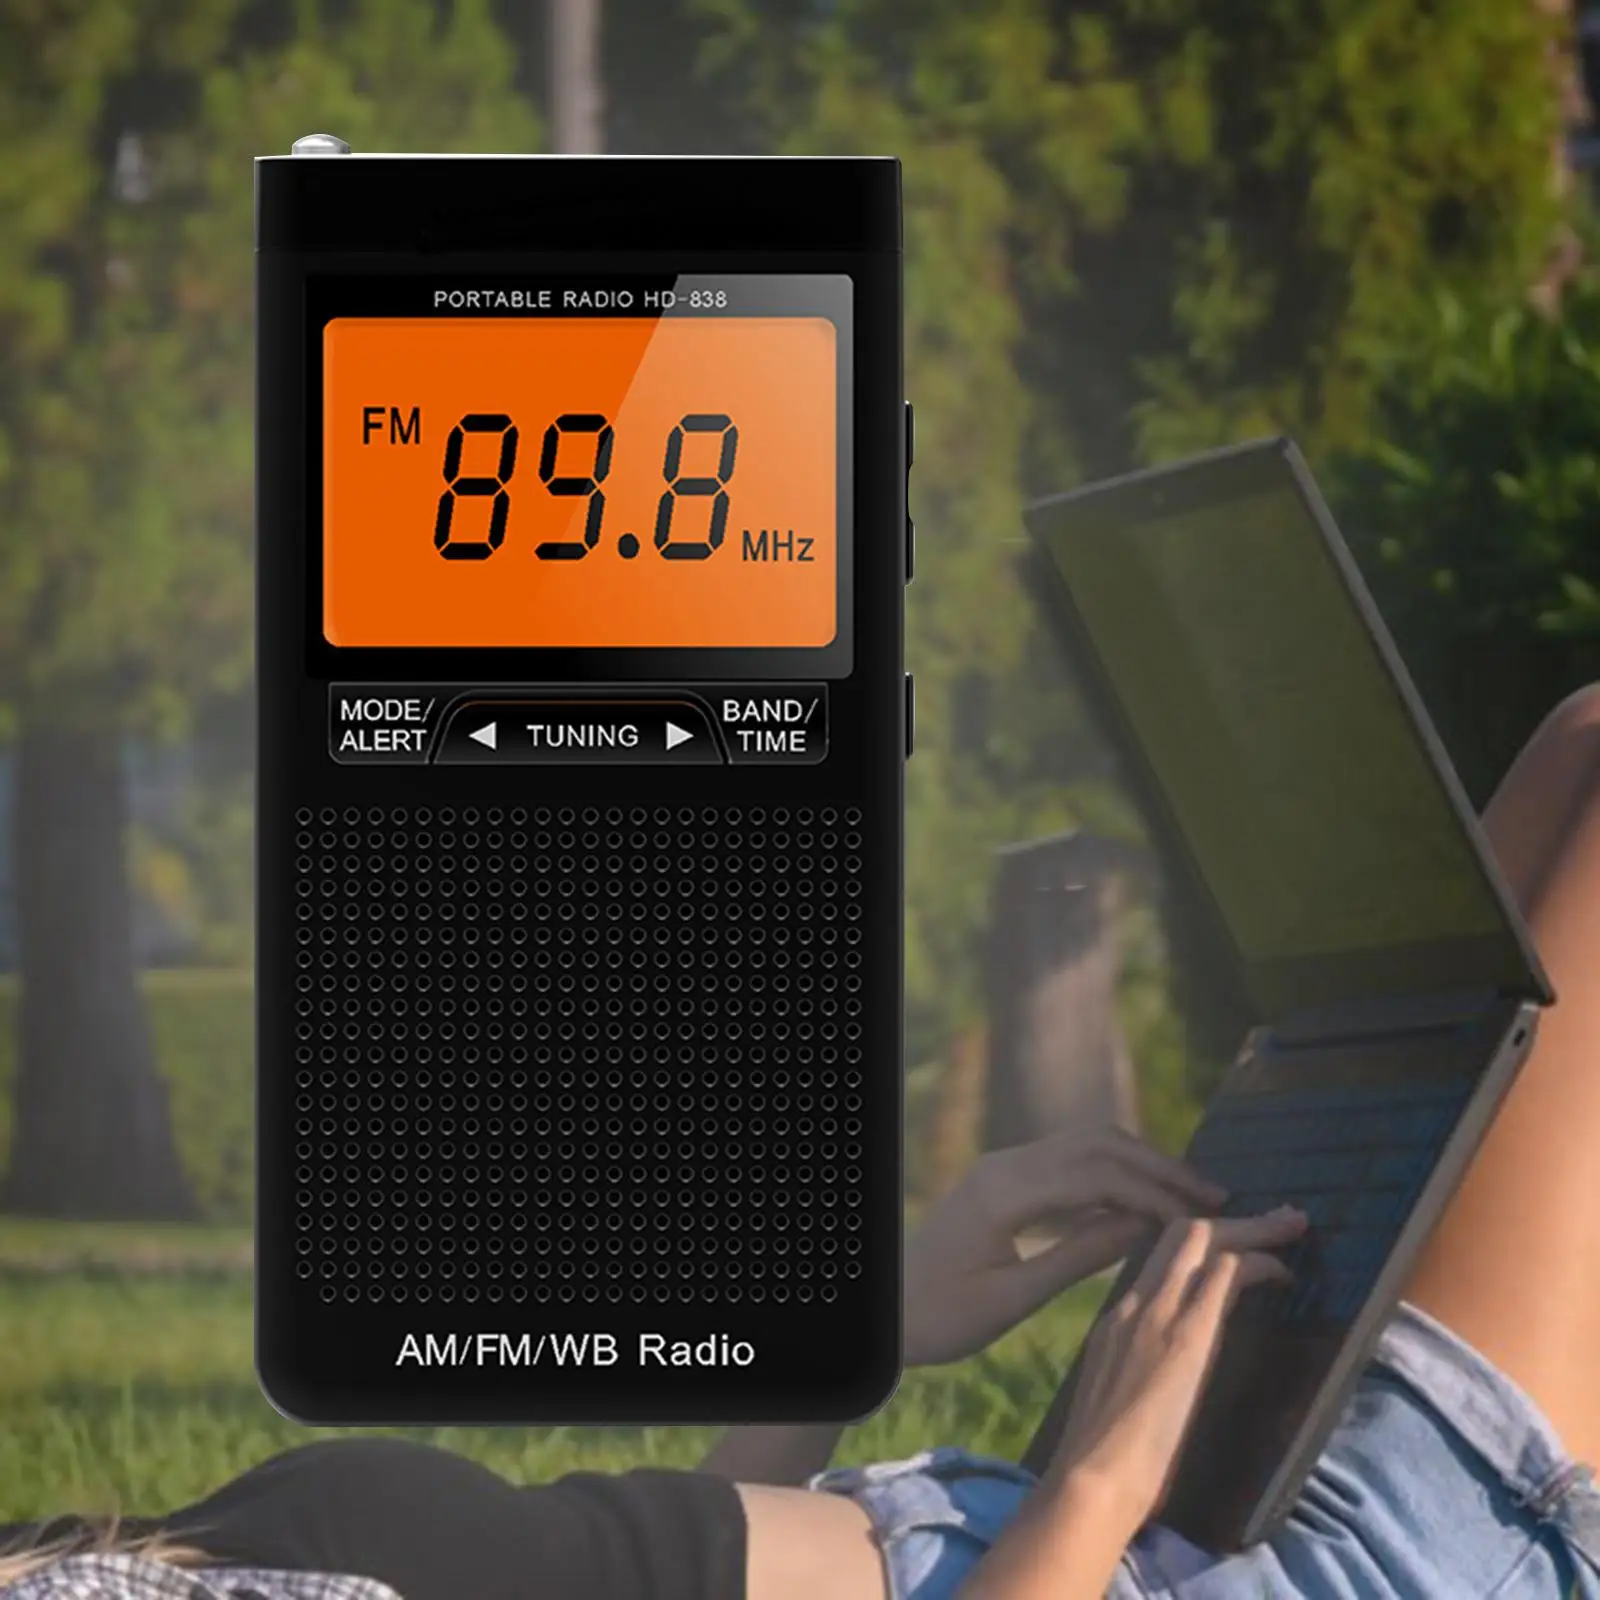 Portable Radio AM FM 3.5mm Headphone Jack Good Reception Personal Radio Alarm Clock for Camping Gym Indoor Outdoor Travel Walk